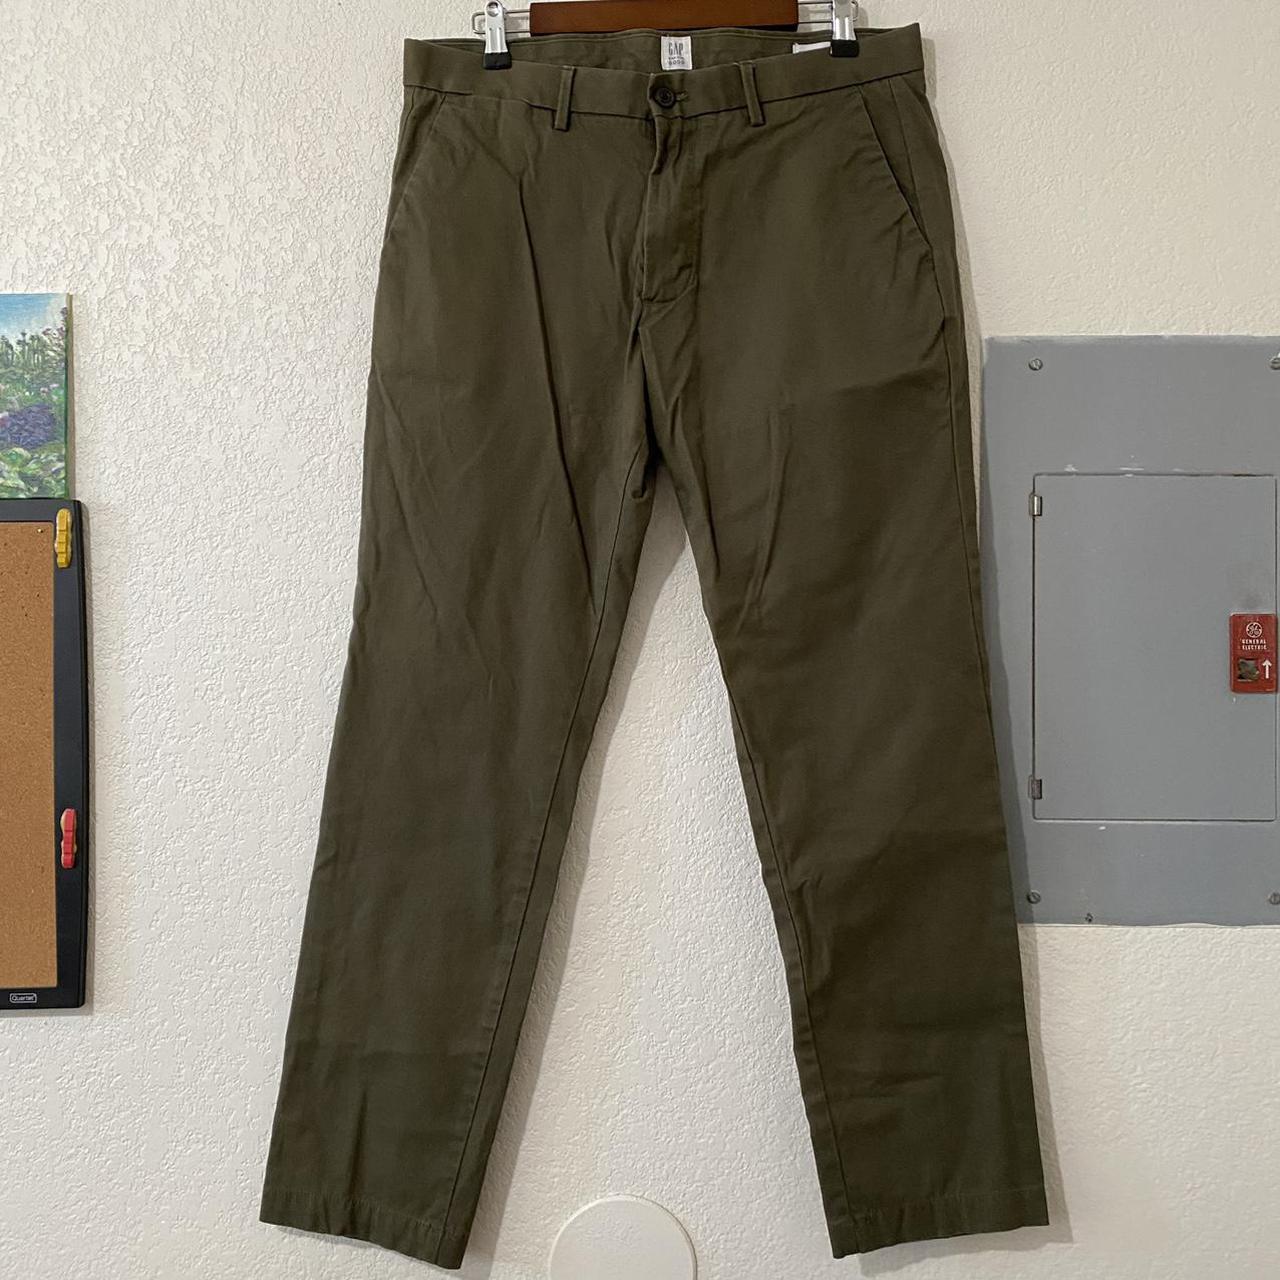 Product Image 2 - GAP Dark Green Pants ✔️

-size: